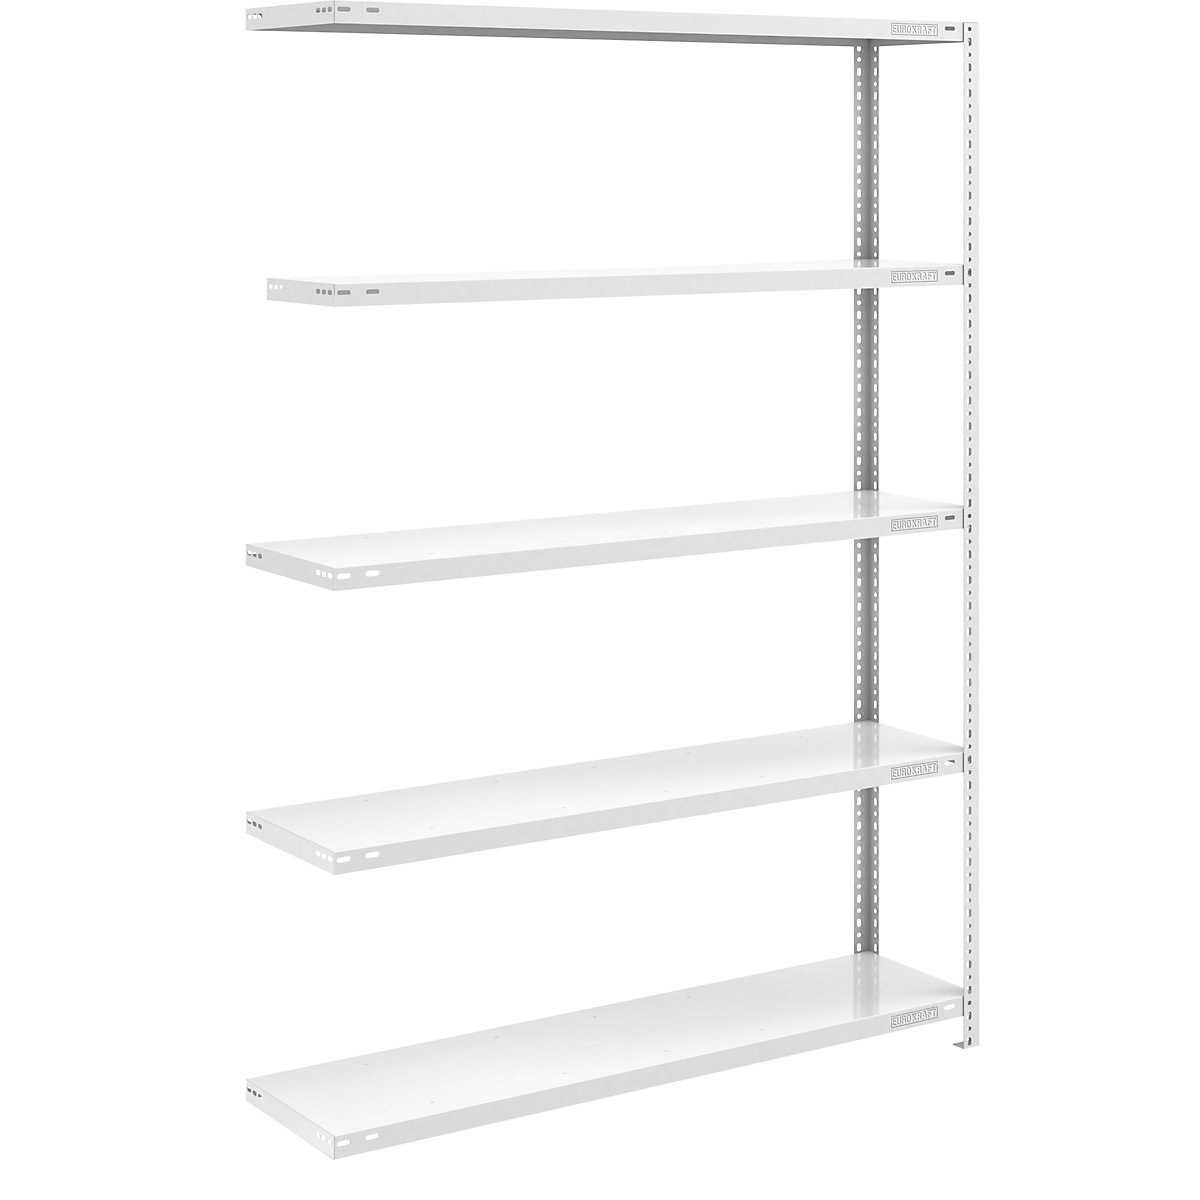 Bolt-together shelf unit, light duty, plastic coated – eurokraft pro, shelf unit height 2000 mm, shelf width 1300 mm, depth 400 mm, extension shelf unit-10